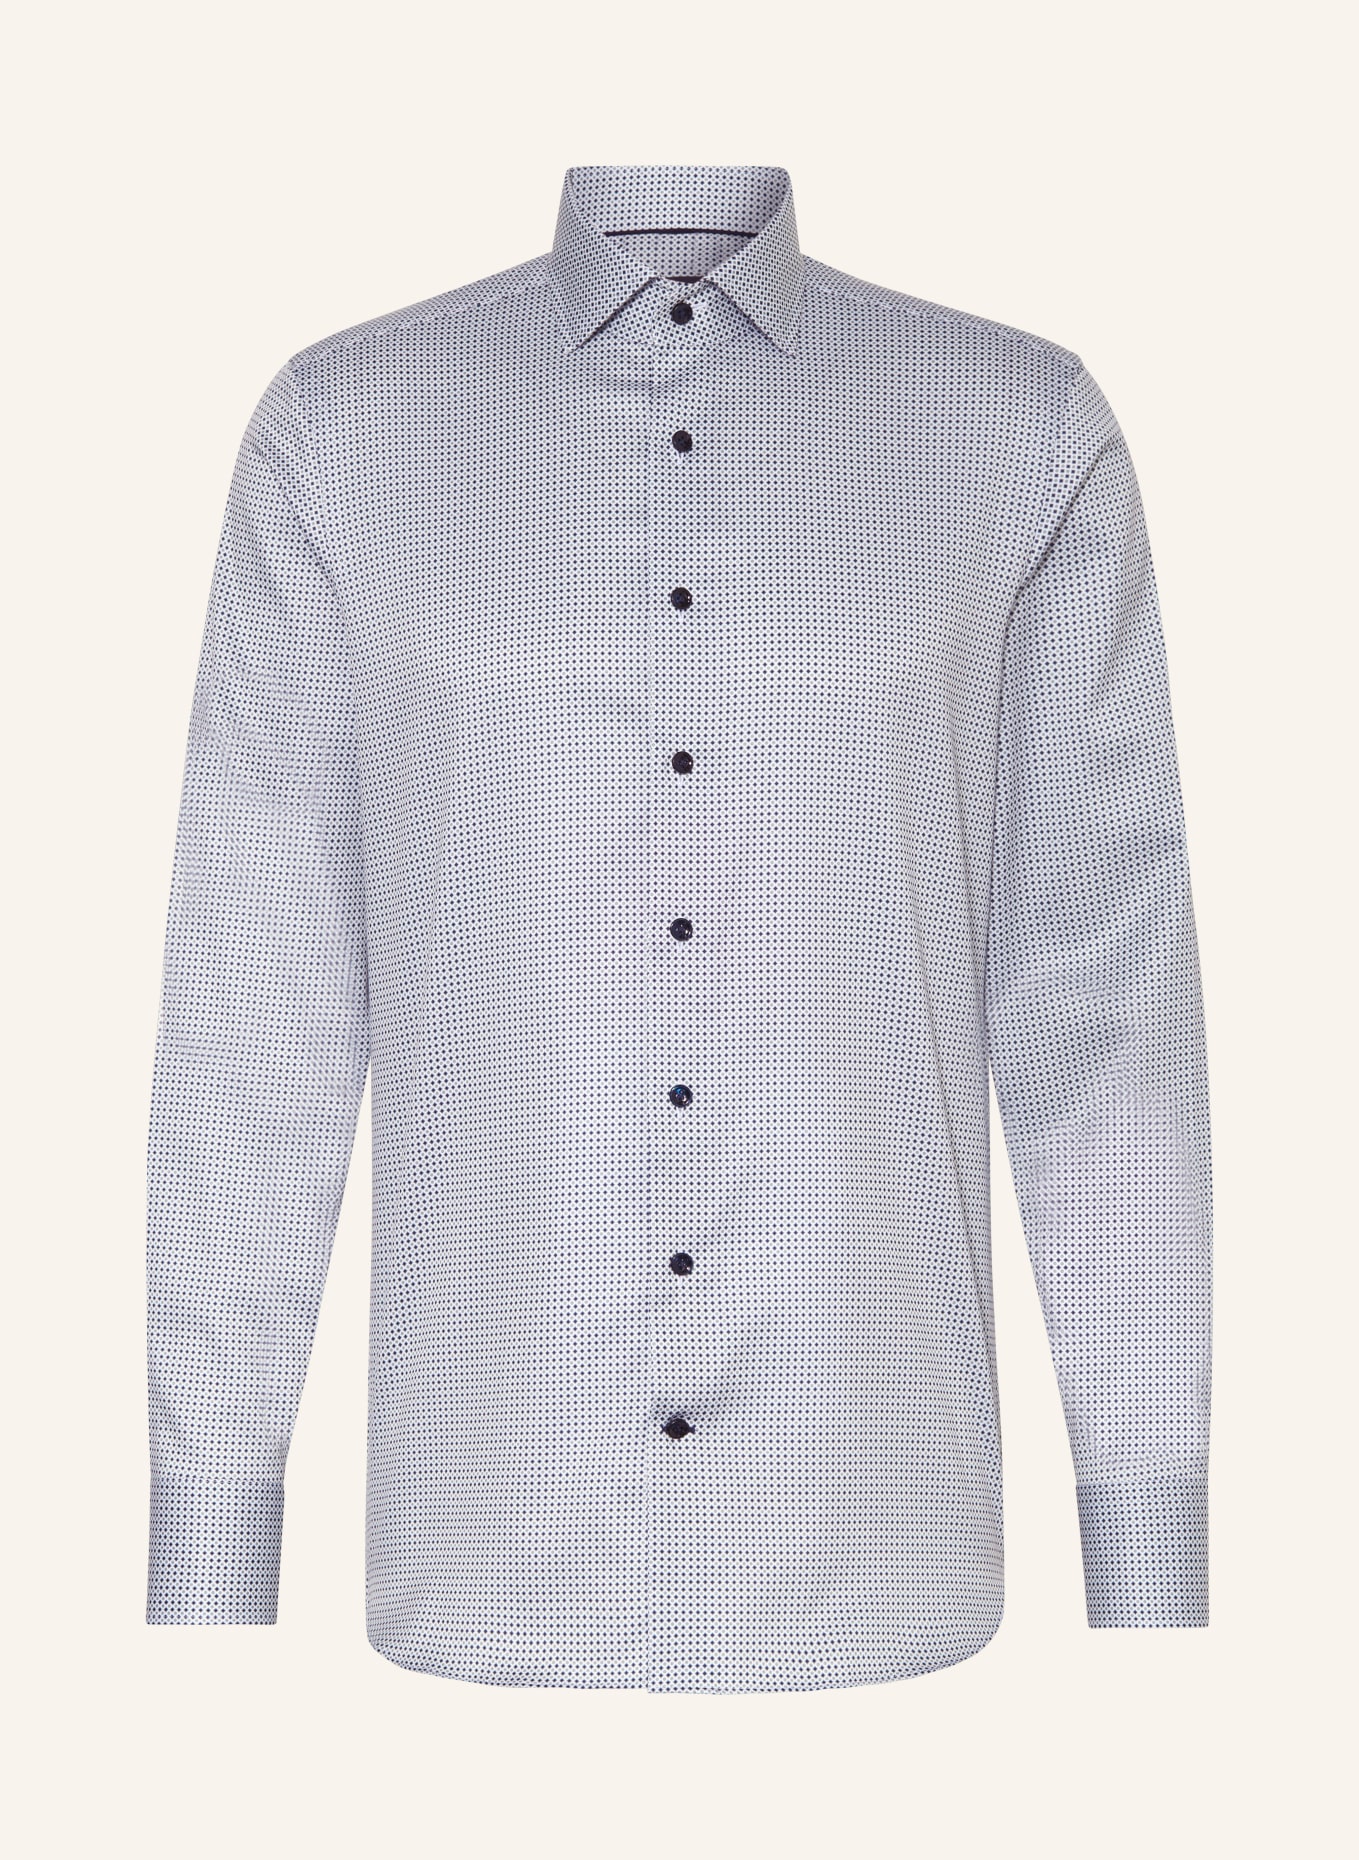 OLYMP SIGNATURE Hemd tailored fit, Farbe: OLIV/ PETROL/ WEISS (Bild 1)